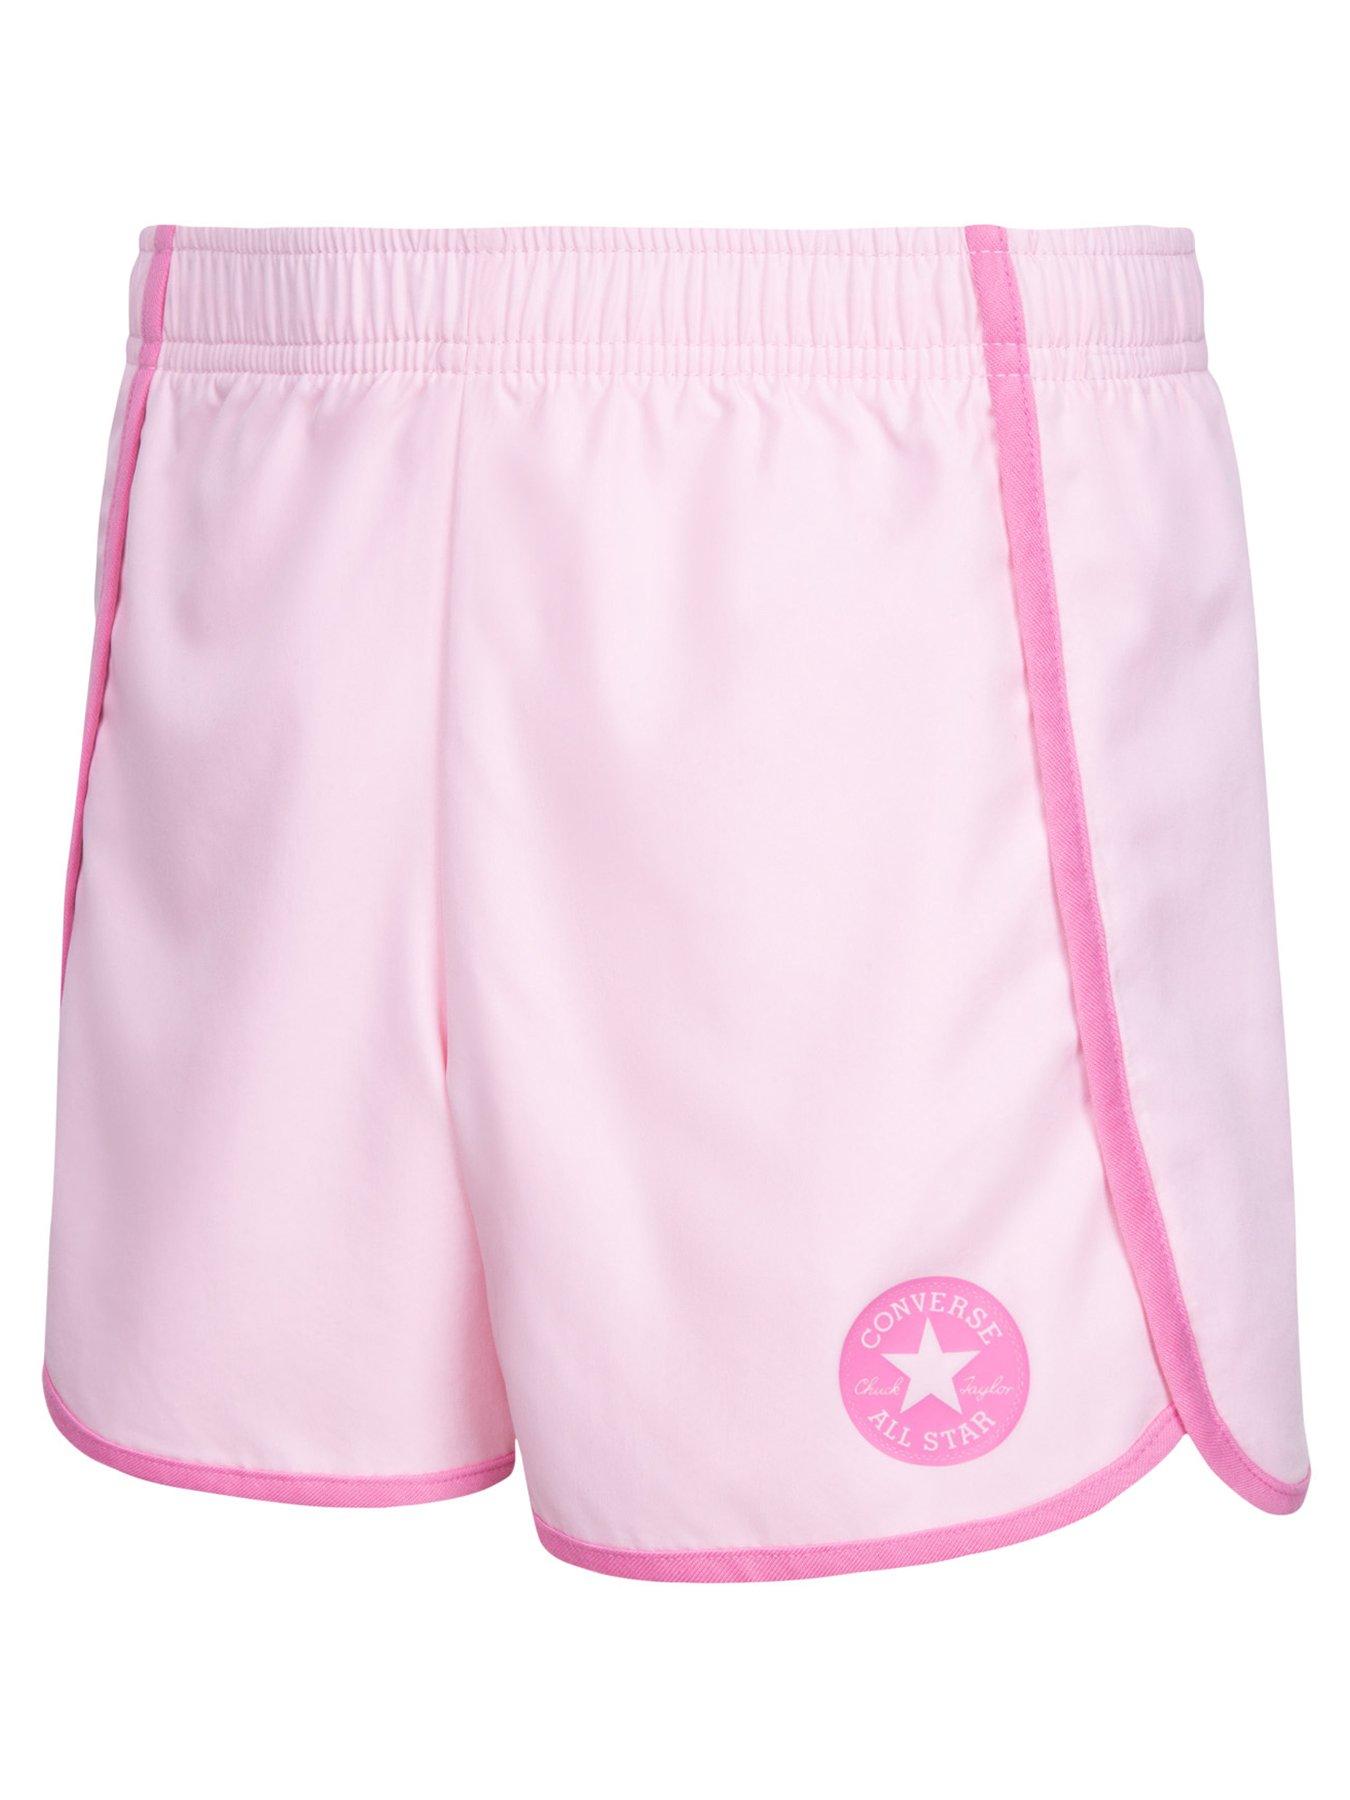 Converse Older Girls Chuck Patch High Rise Shorts - Pink